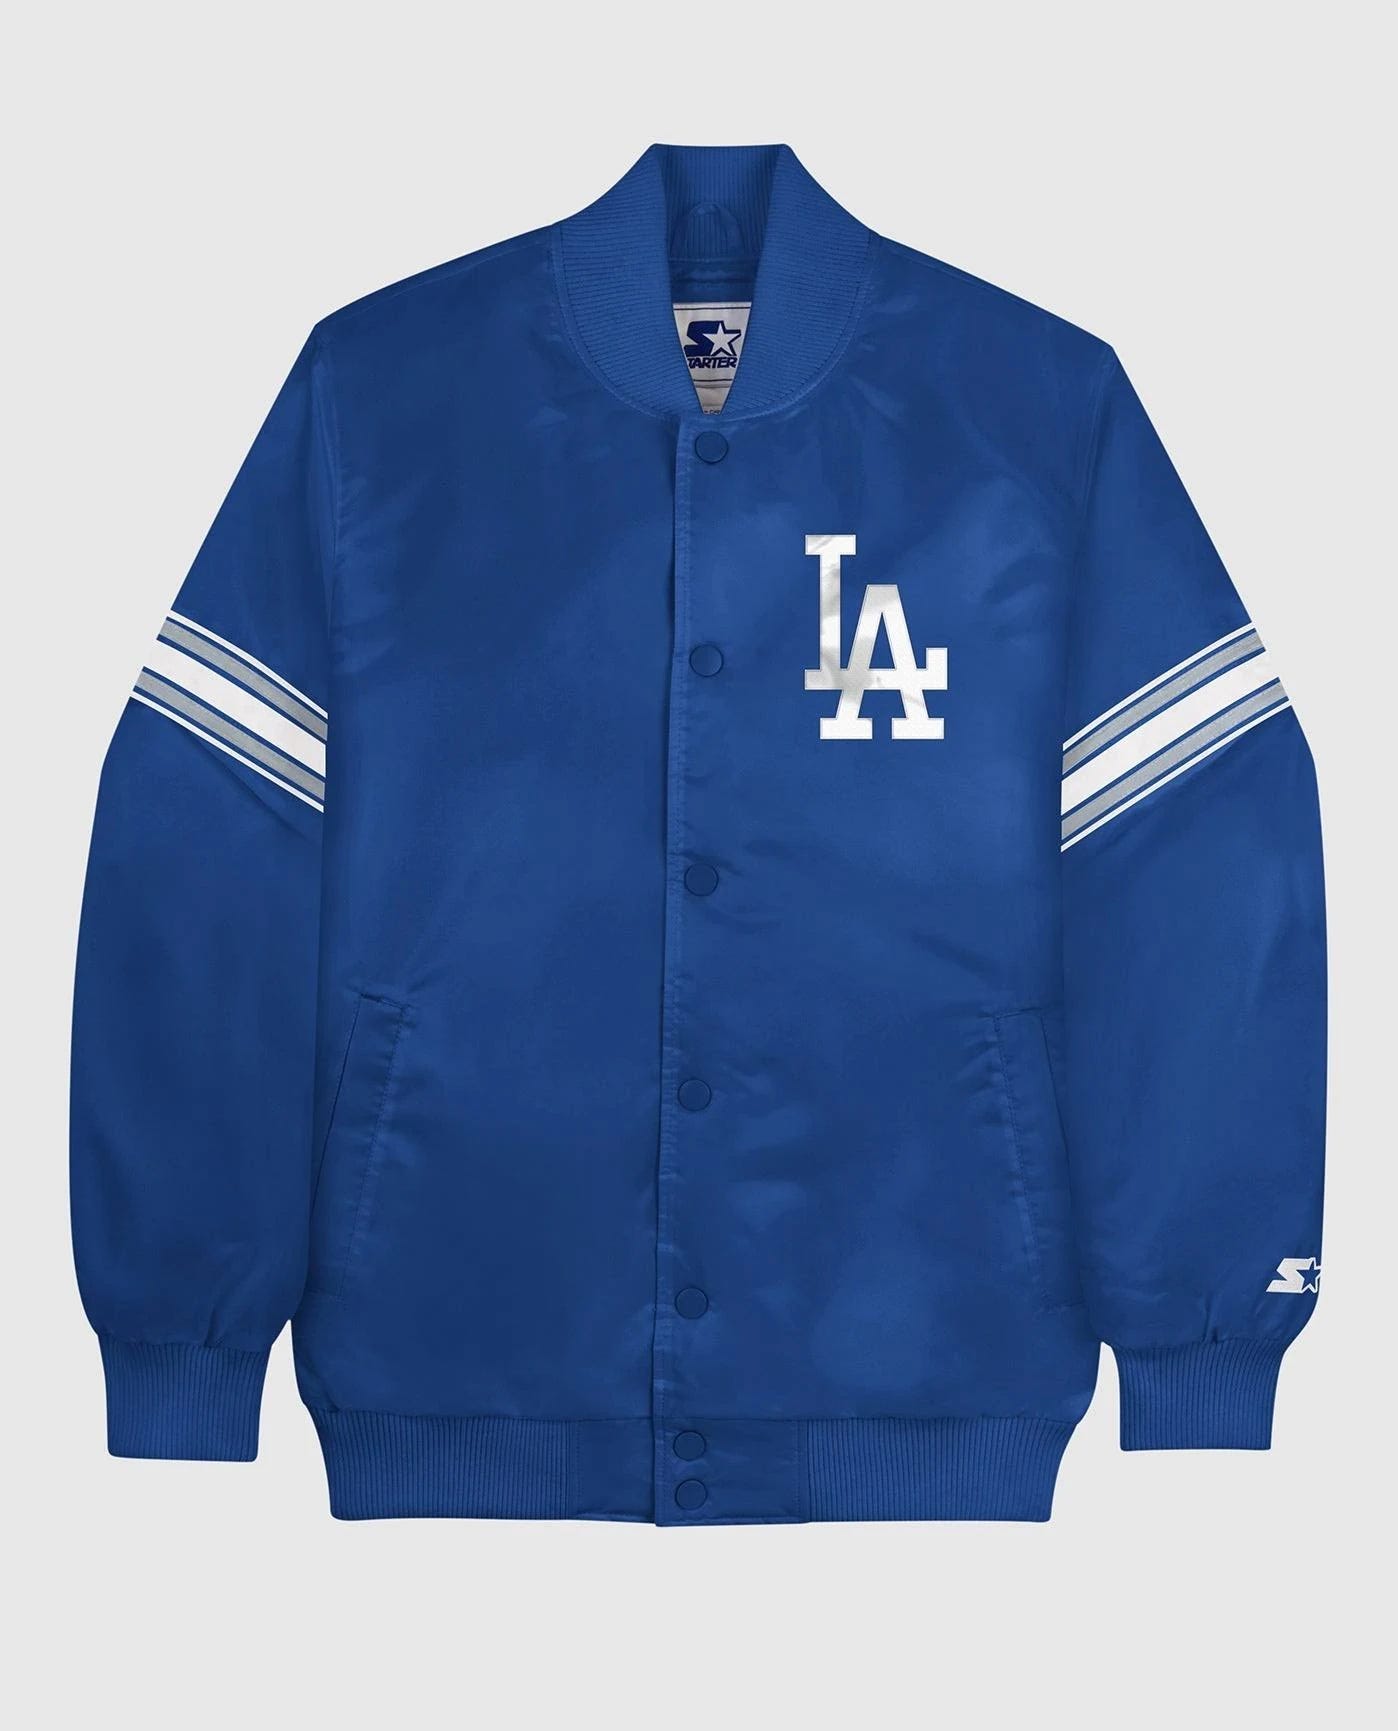 Stylish Starter Dodgers Pick & Roll Satin Jacket for Fans | Image